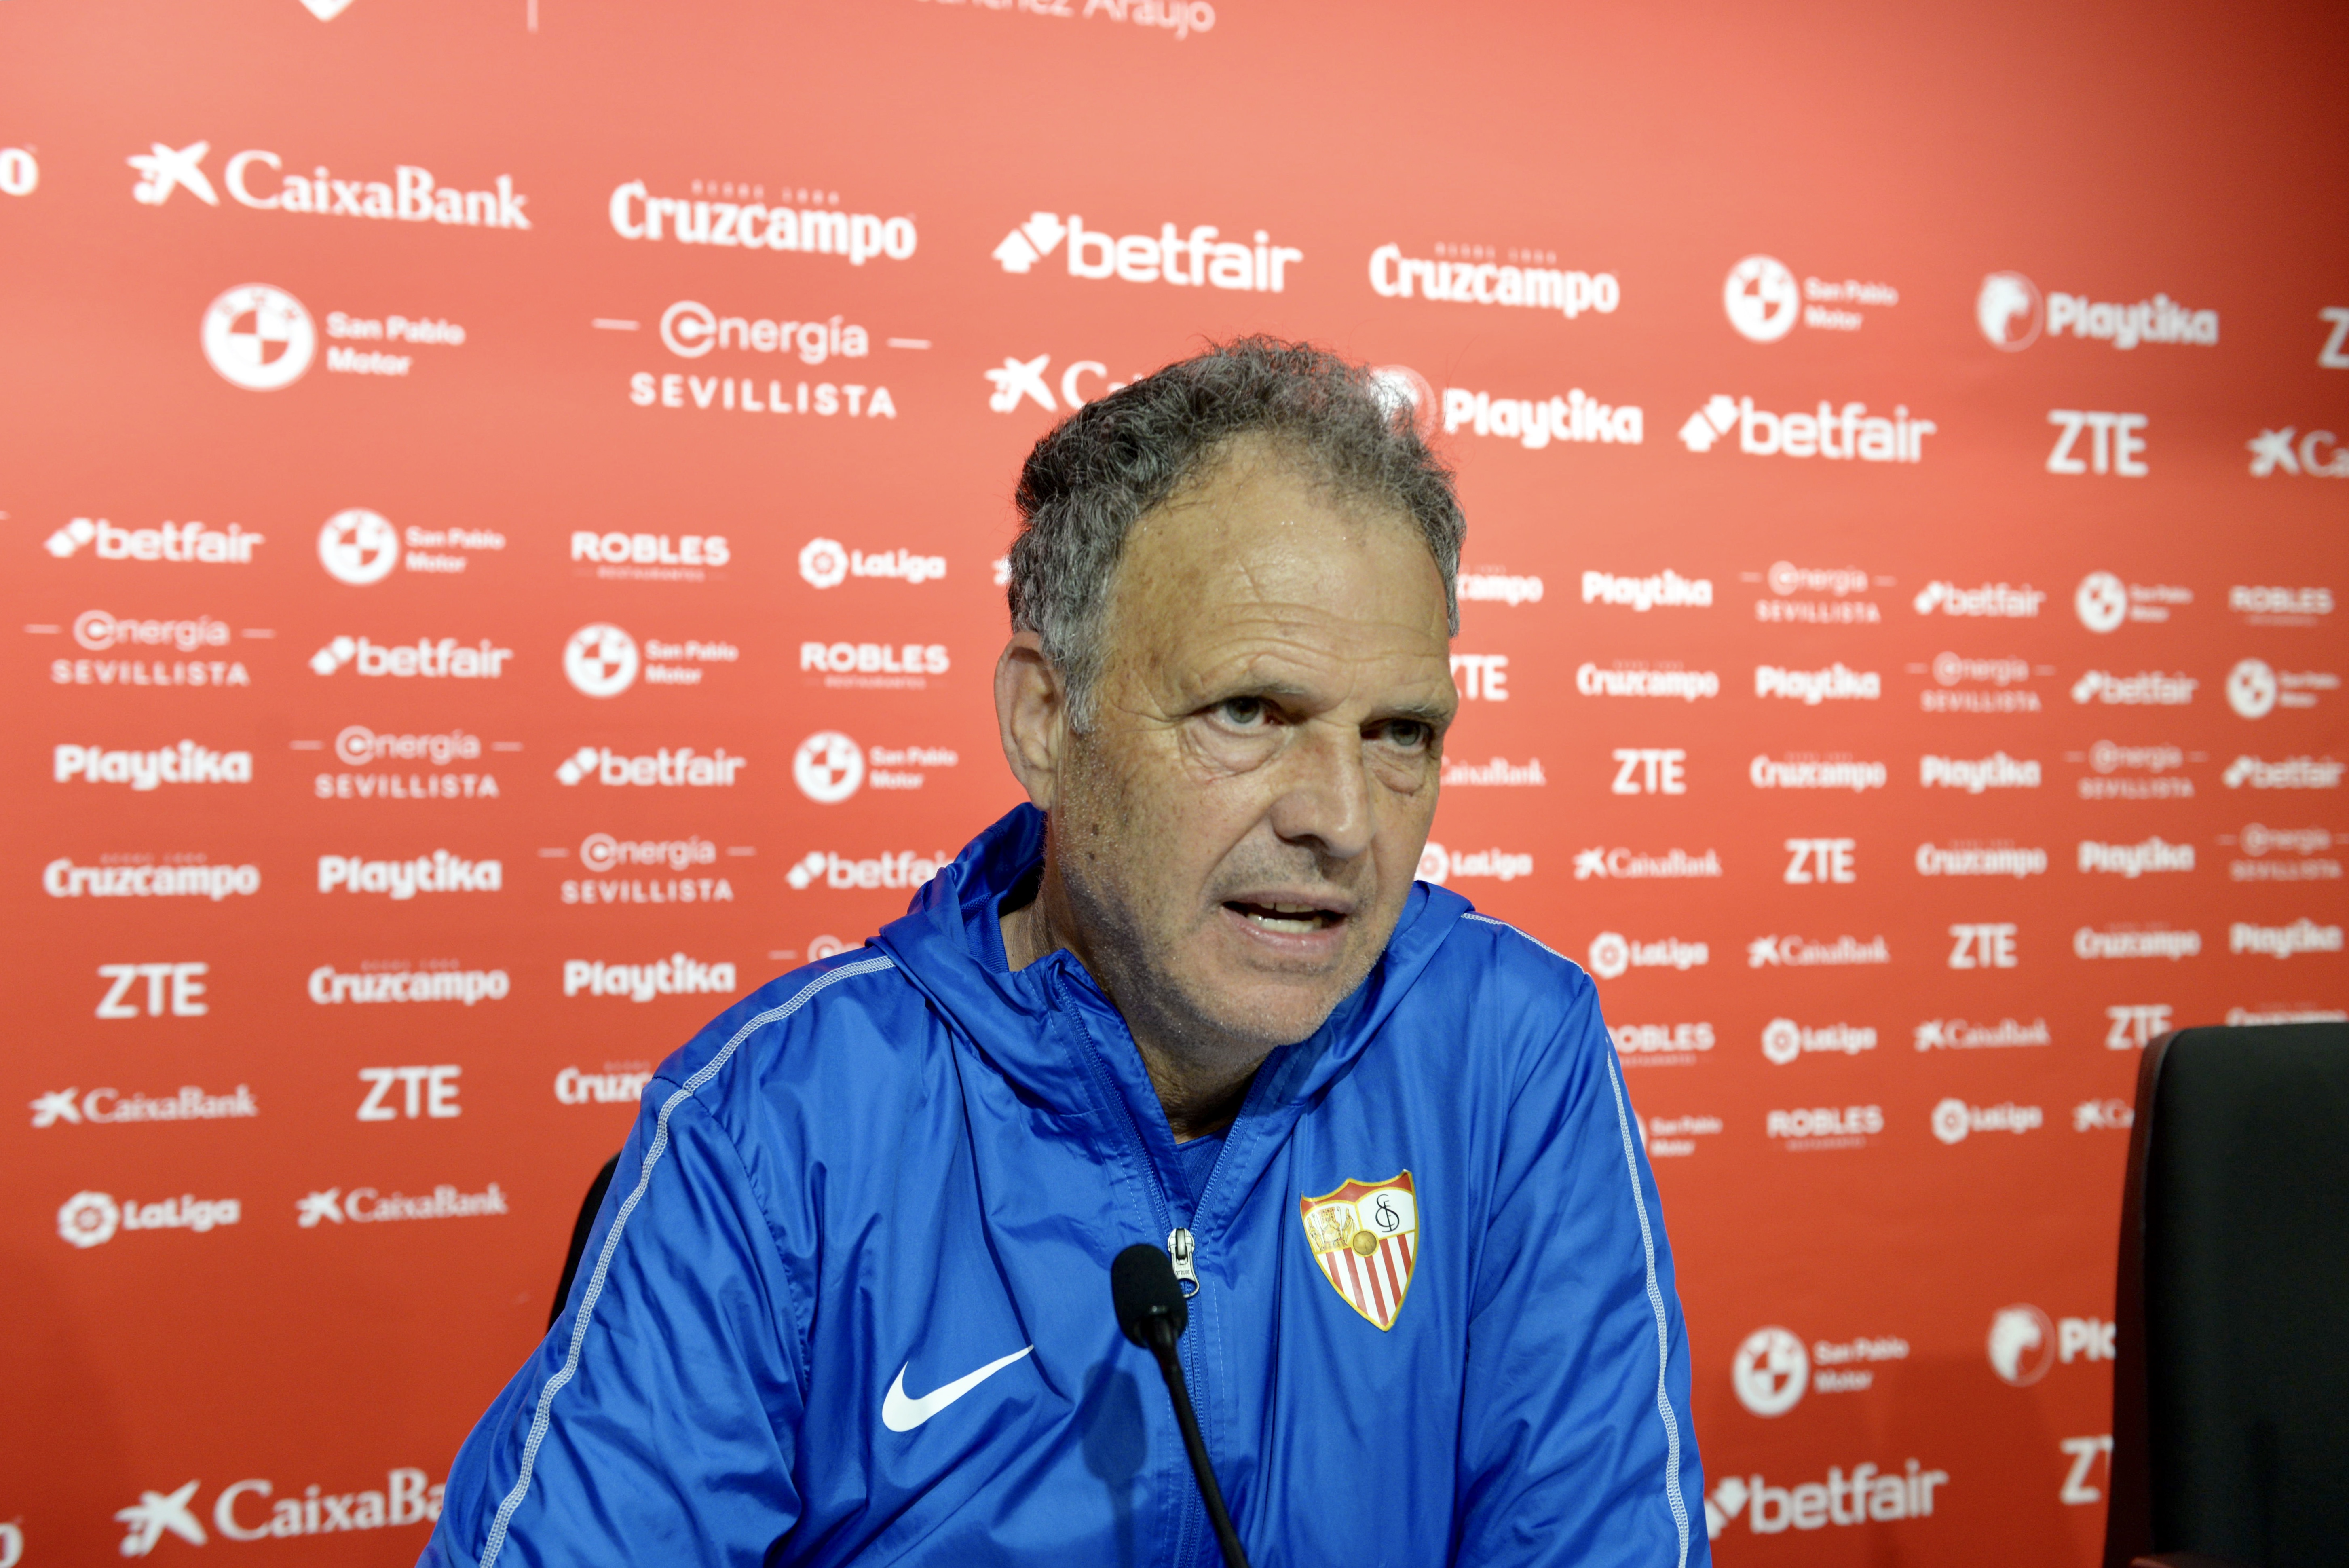 Caparrós in the press conference before CD Leganés 